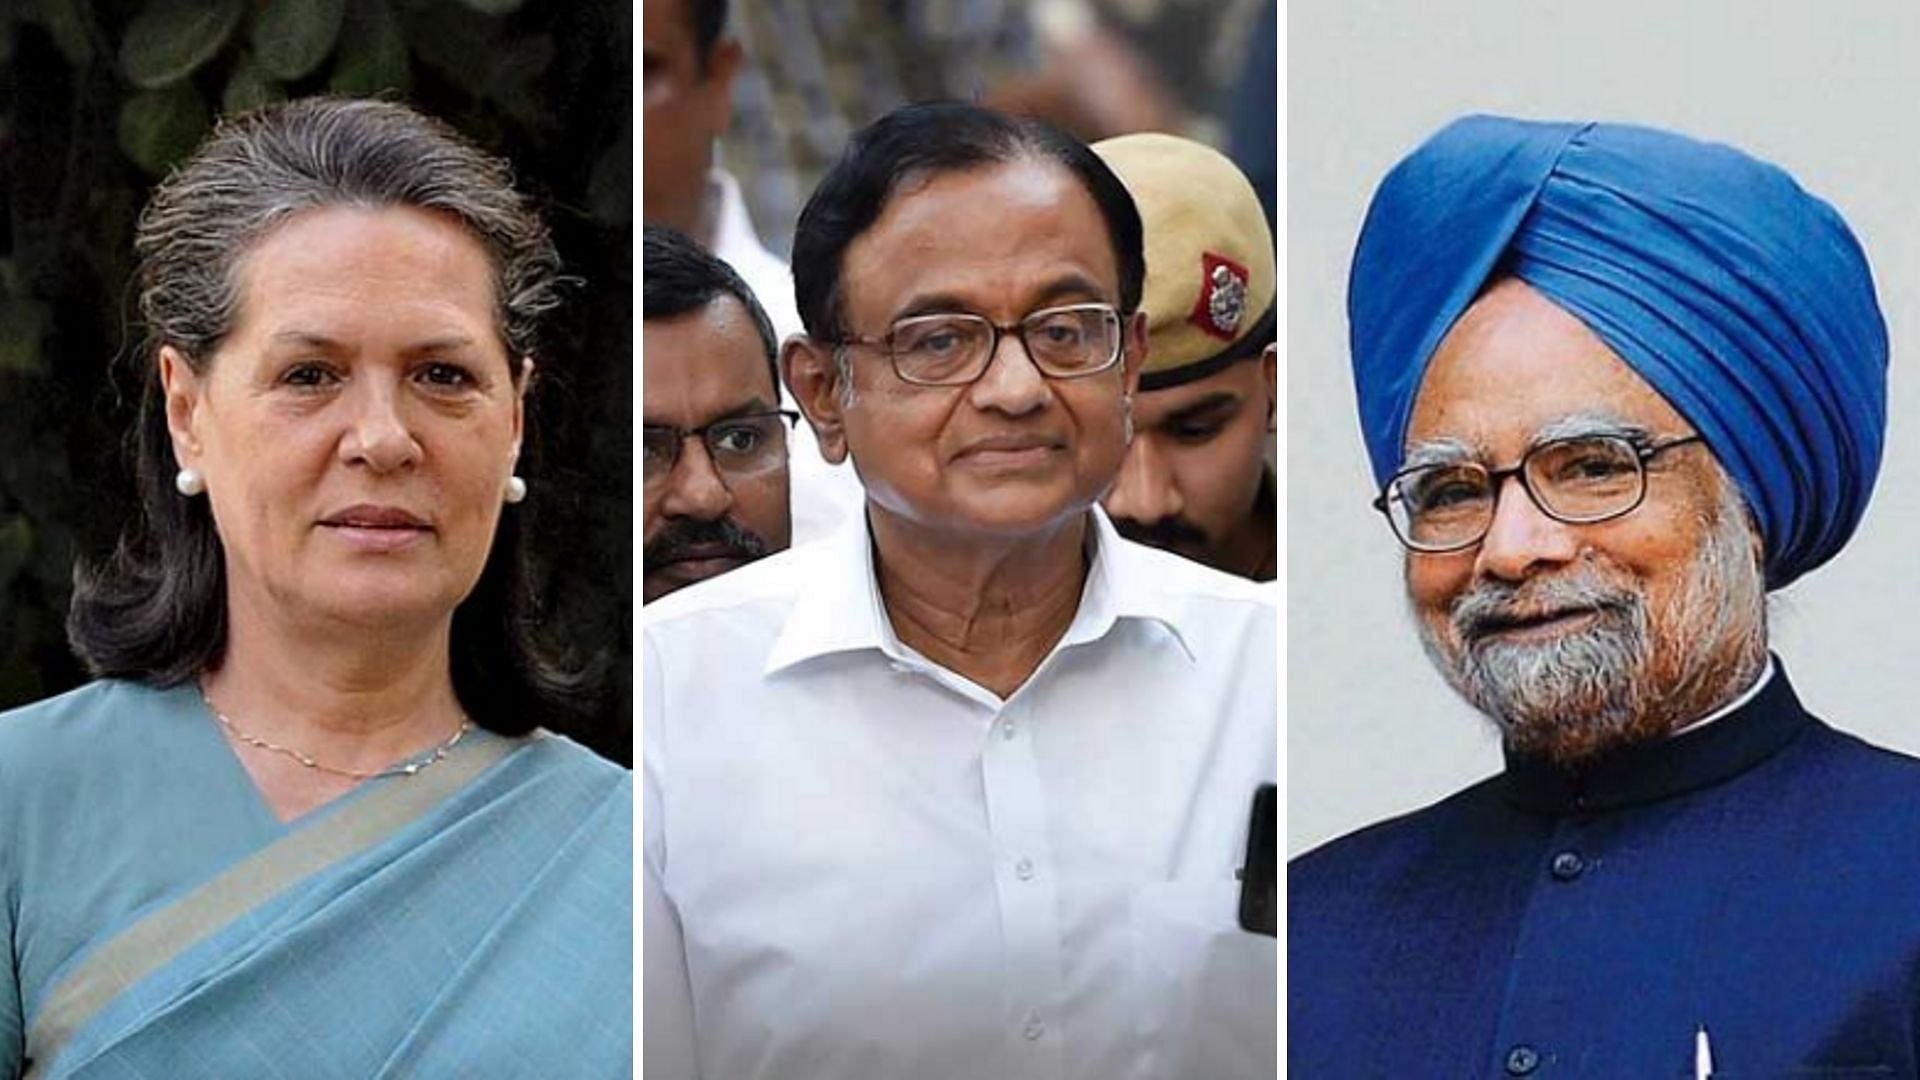 Former prime minister Manmohan Singh and Congress president Sonia Gandhi on Monday, 23 September met P Chidambaram in Tihar Jail.